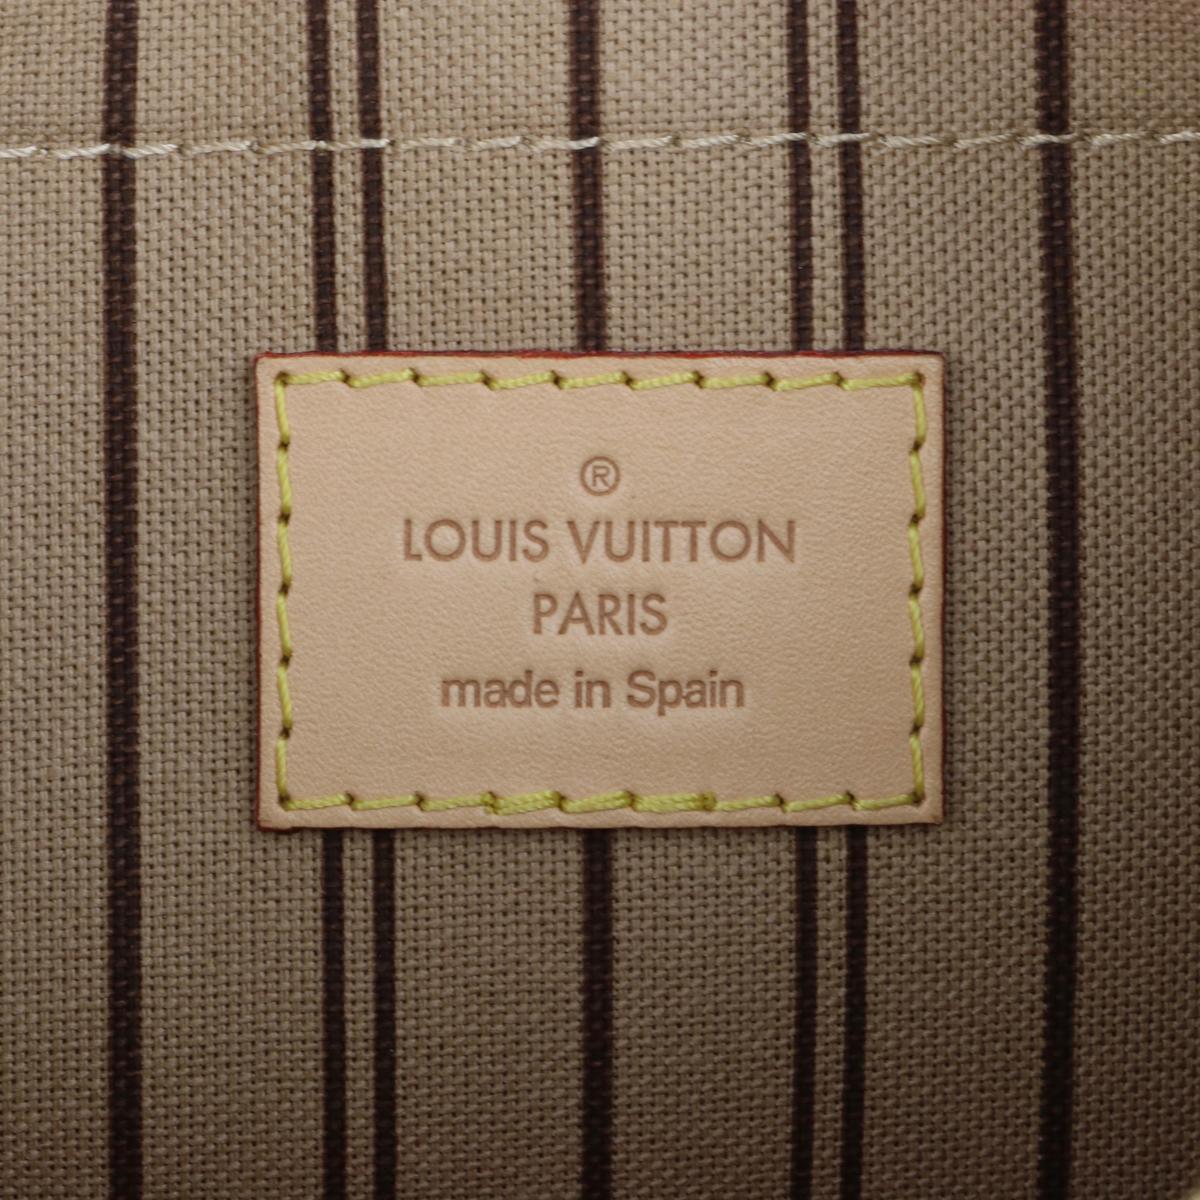 Louis Vuitton Neverfull MM Pochette Pouch in Monogram with Beige Interior 2016 11